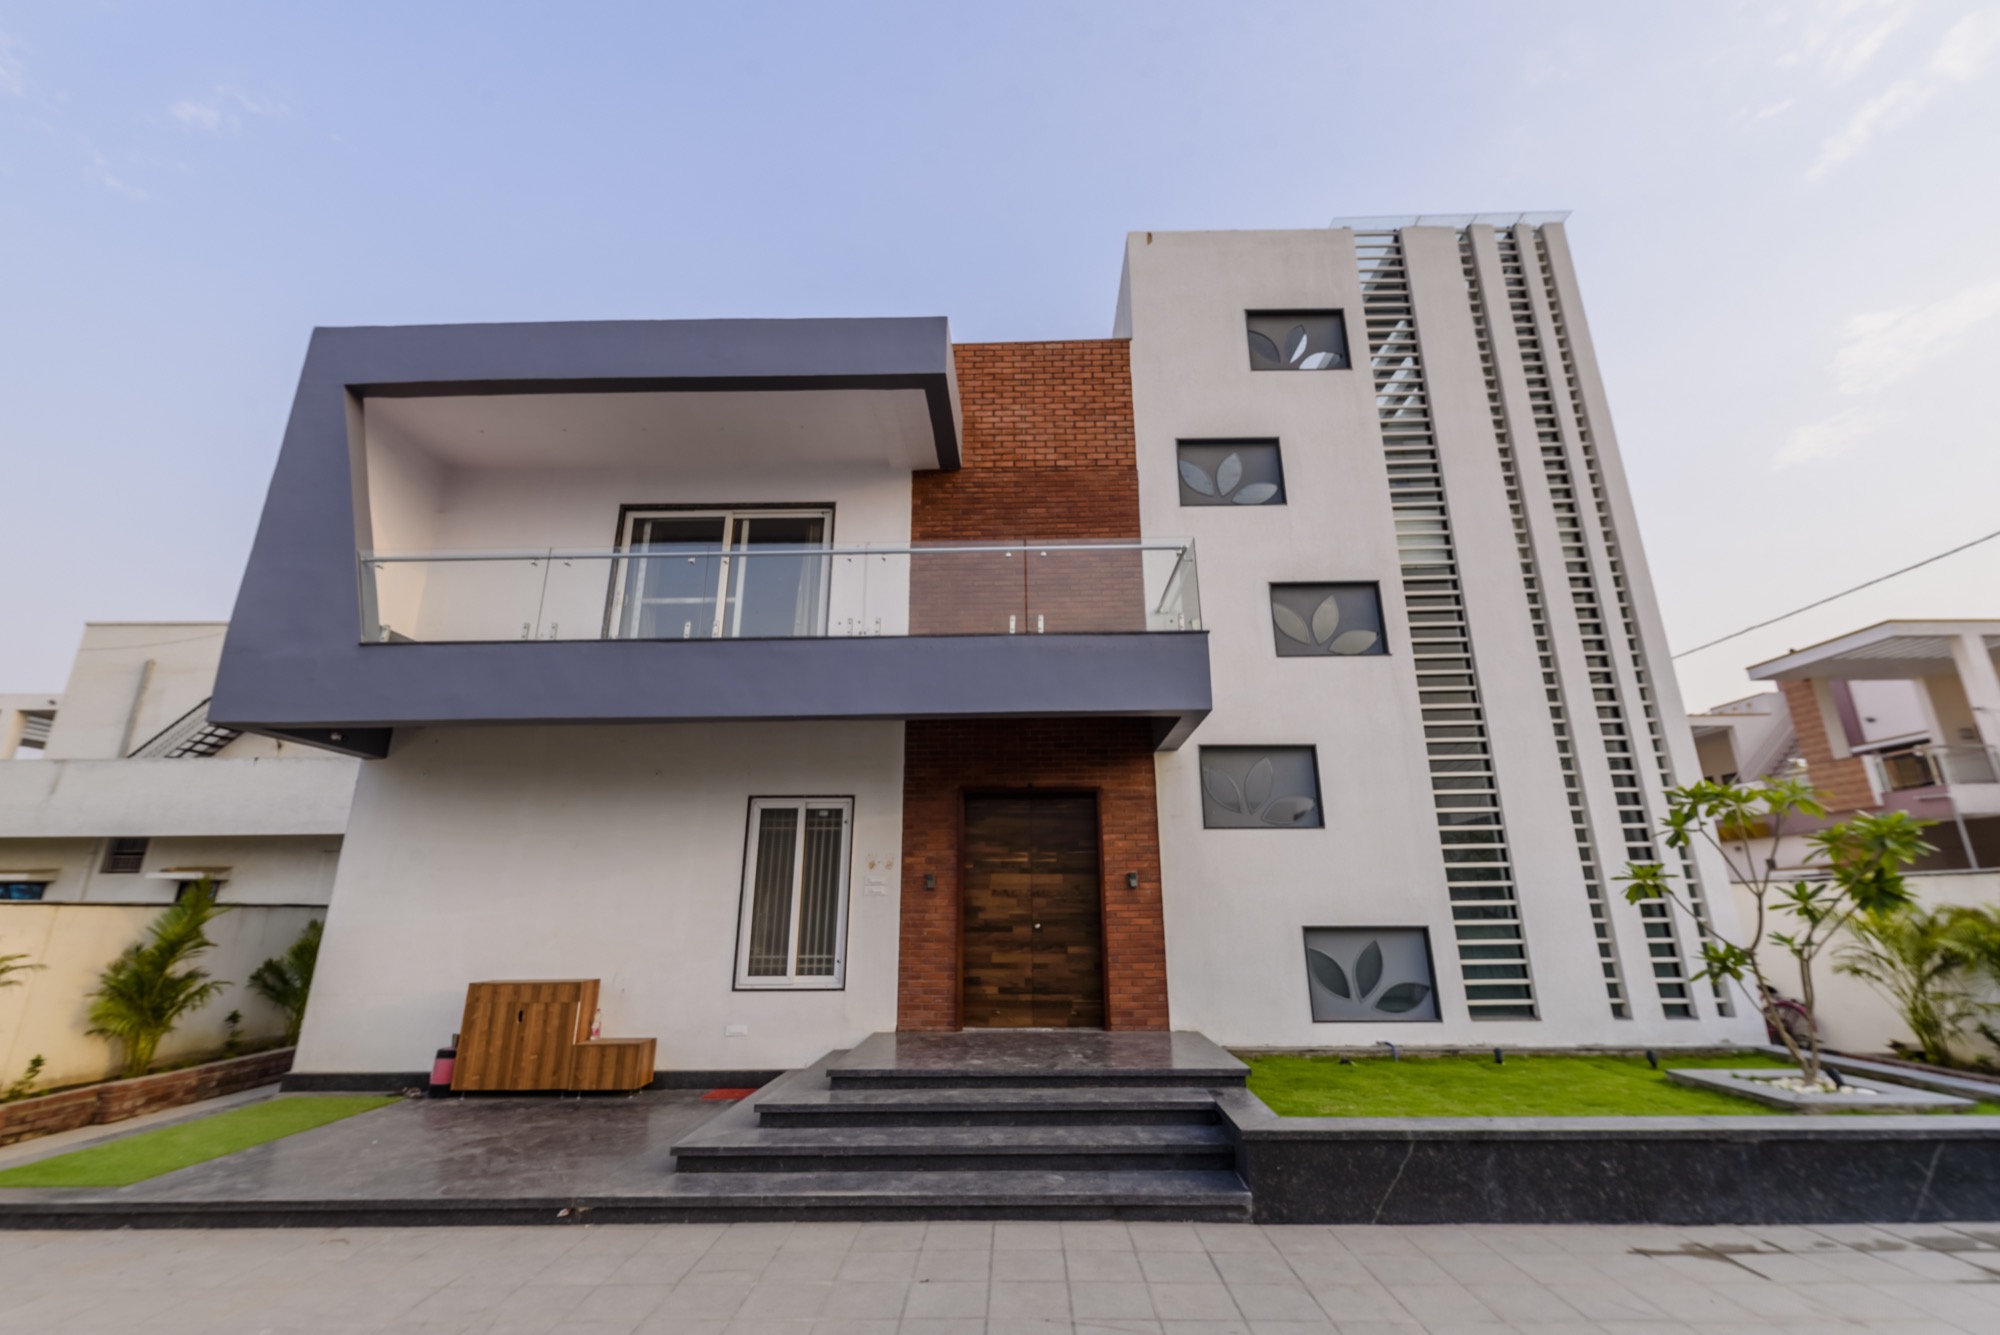 Chandan Villa - Residence for Mr. Vijay Sankhala at Durg, by Rishabh Luniya and Associates 1